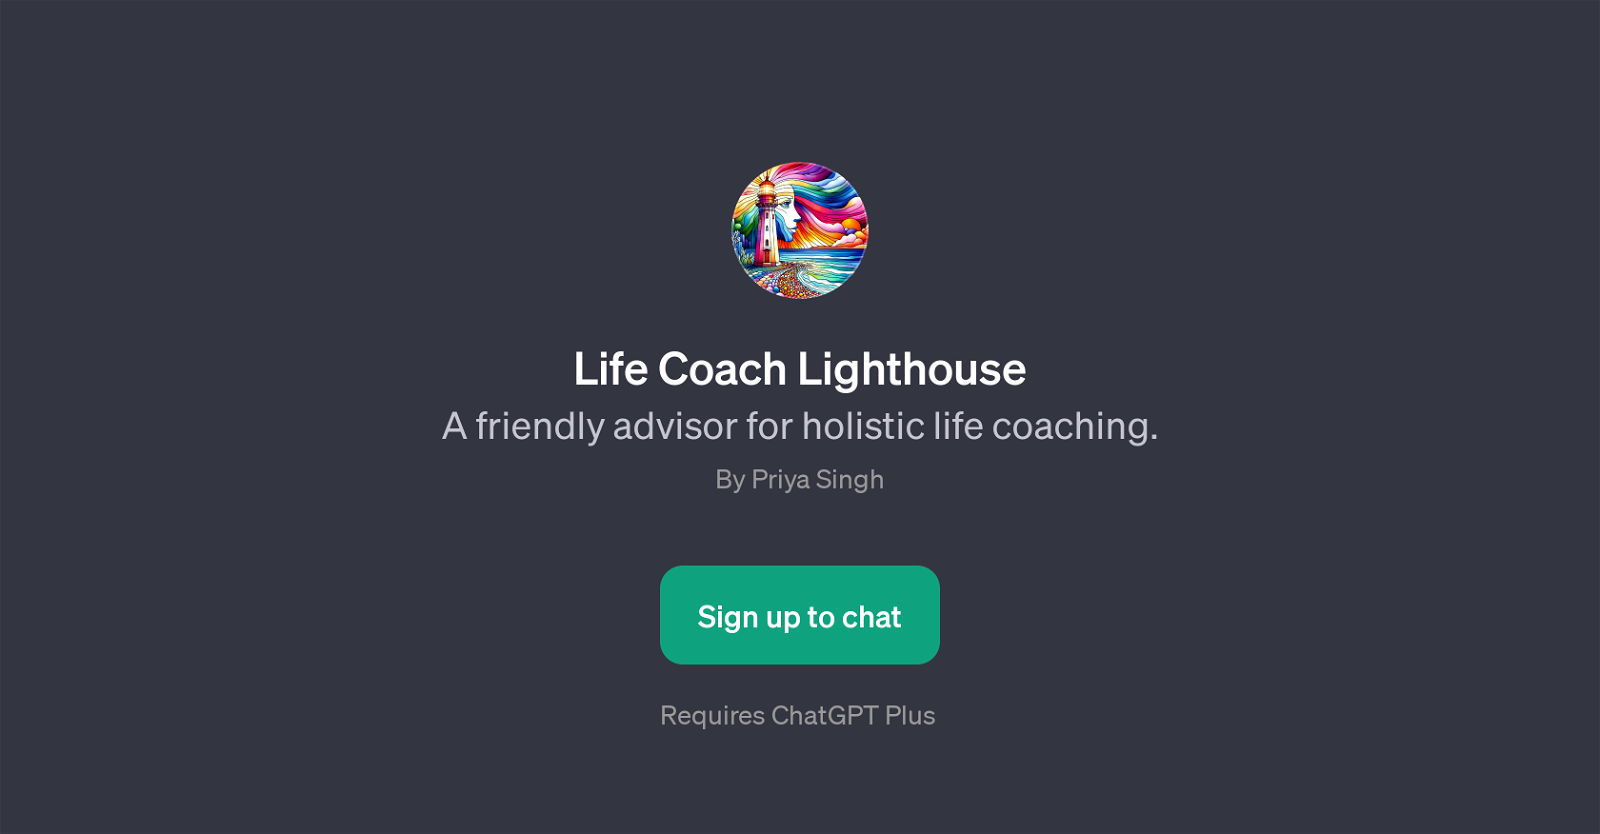 Life Coach Lighthouse website